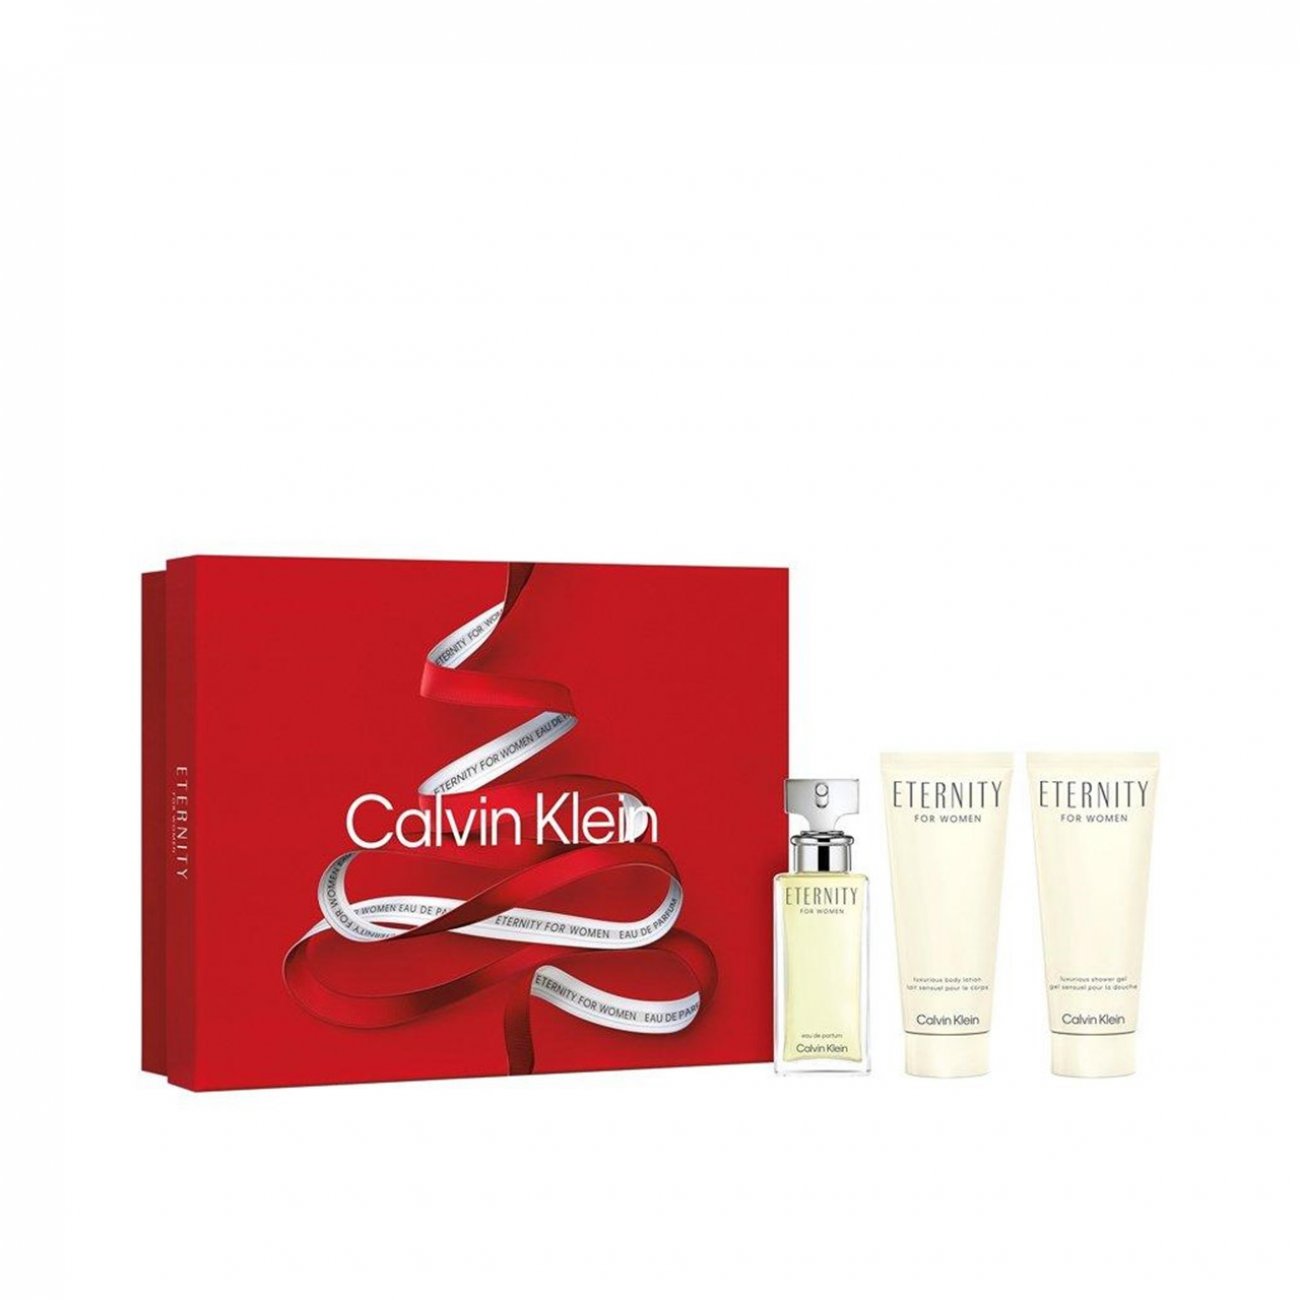 Trappenhuis knelpunt tobben Buy GIFT SET:Calvin Klein Eternity For Women Eau de Parfum 50ml Holiday  Coffret (1.7fl oz) · USA